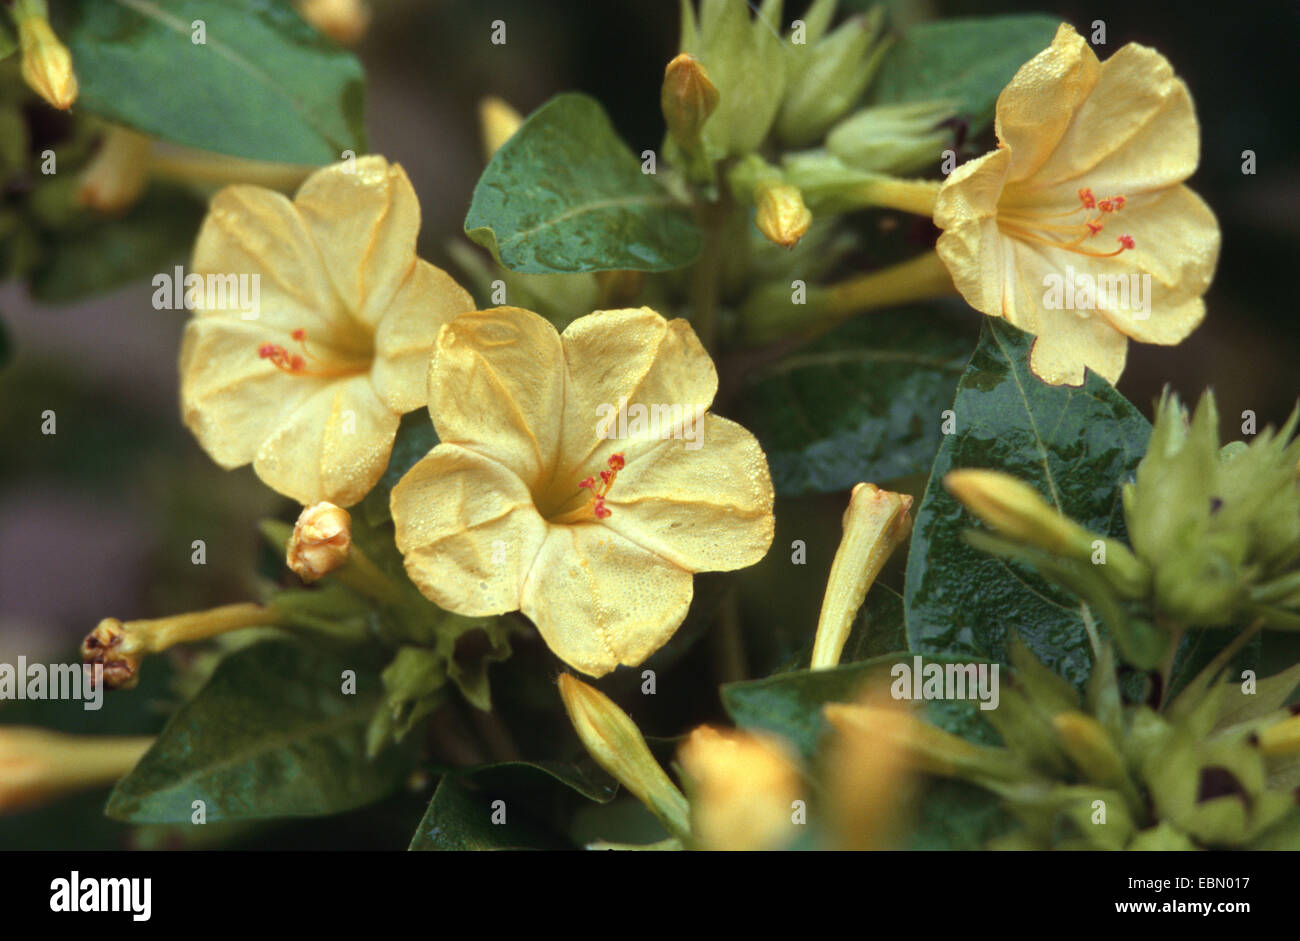 common four-o'clock, marvel of peru (Mirabilis jalapa 'Lutea', Mirabilis jalapa Lutea, Mirabilis jalapa), yellow flowering cultivar Lutea Stock Photo